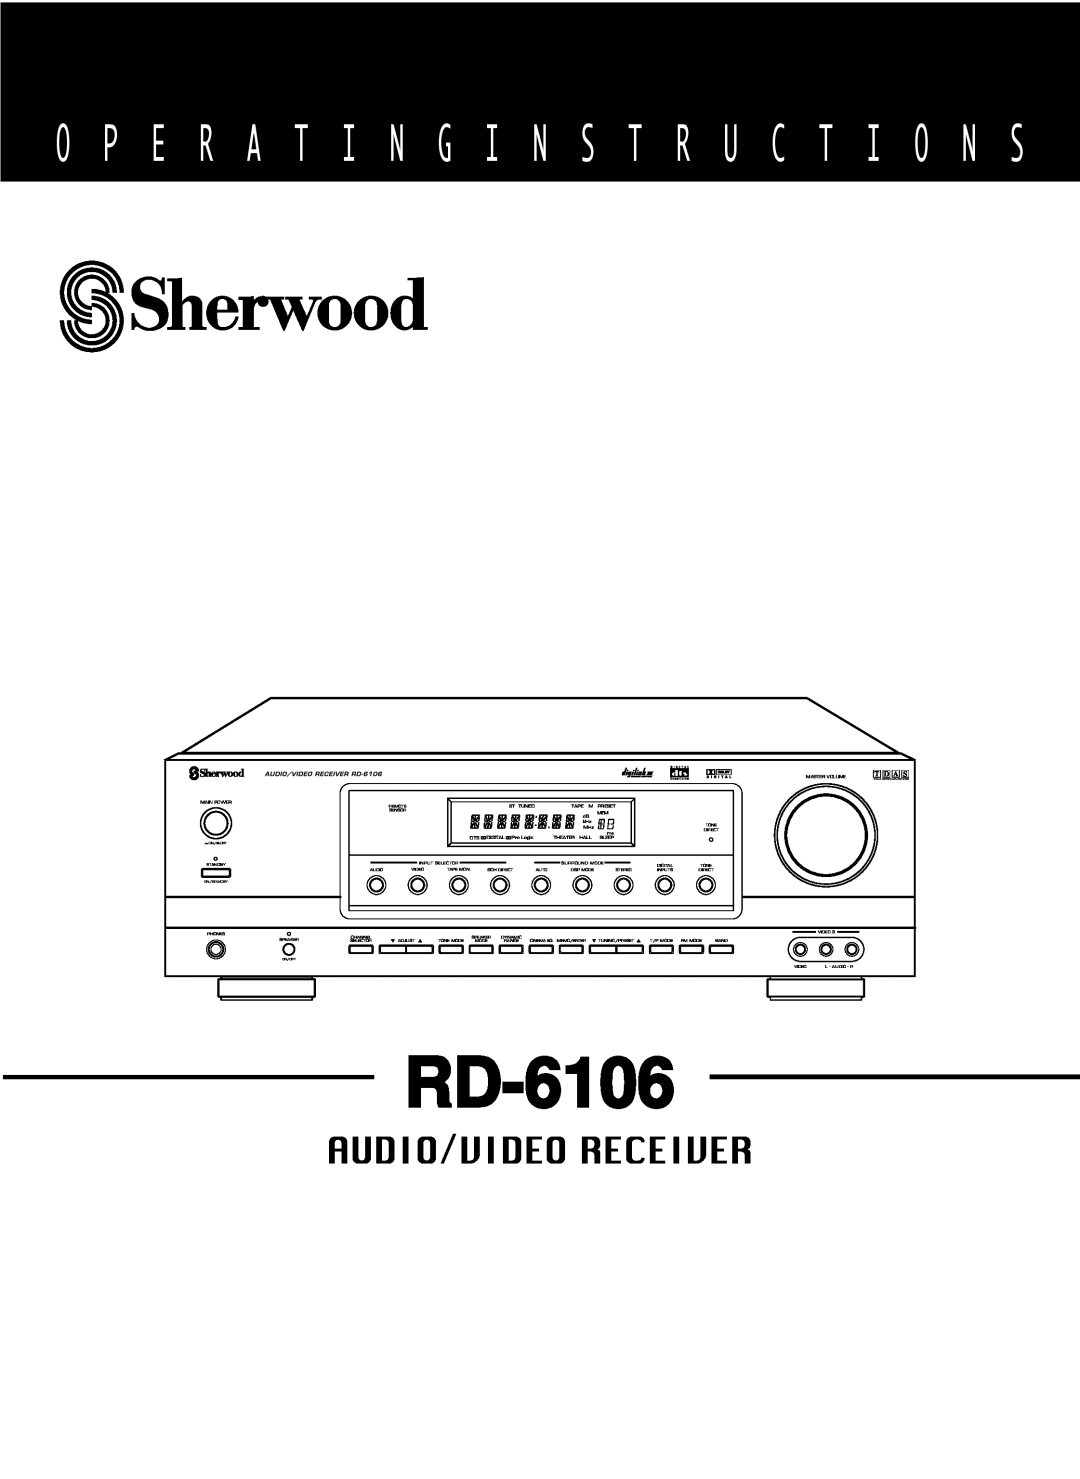 Sherwood RD-6106 manual O P E R A T I N G I N S T R U C T I O N S, Audio/Video Receiver, T D A S 